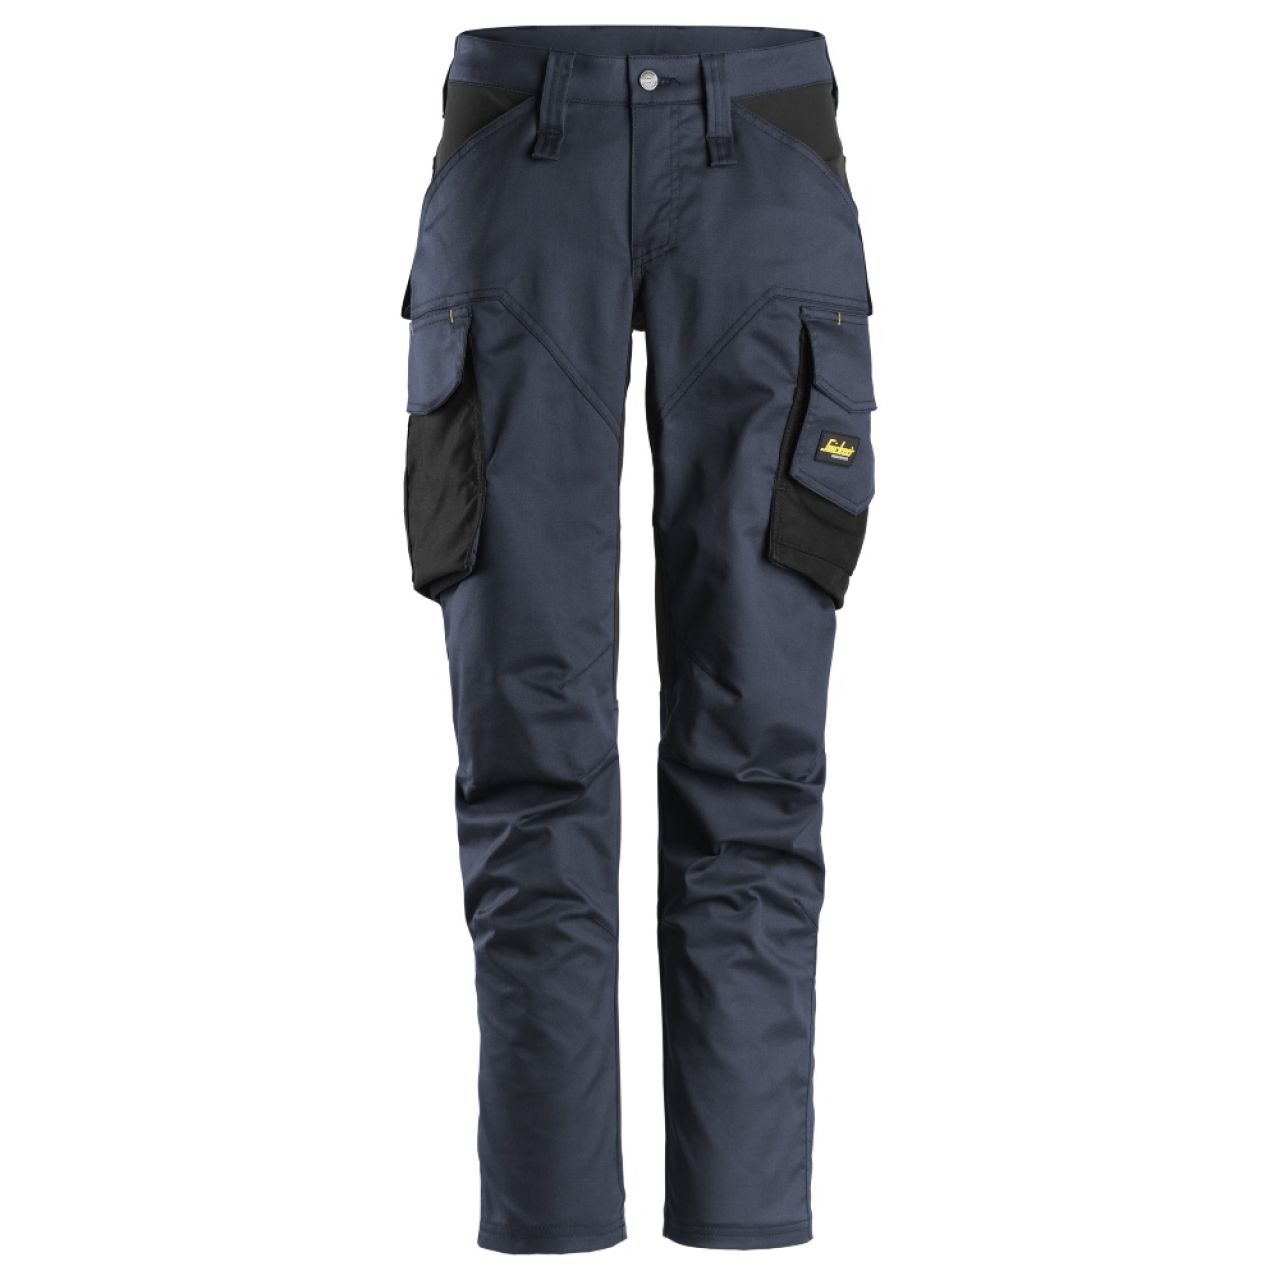 6703 Pantalones largos de trabajo elásticos para mujer con bolsillos para rodilleras AllroundWork azul marino-negro talla 18